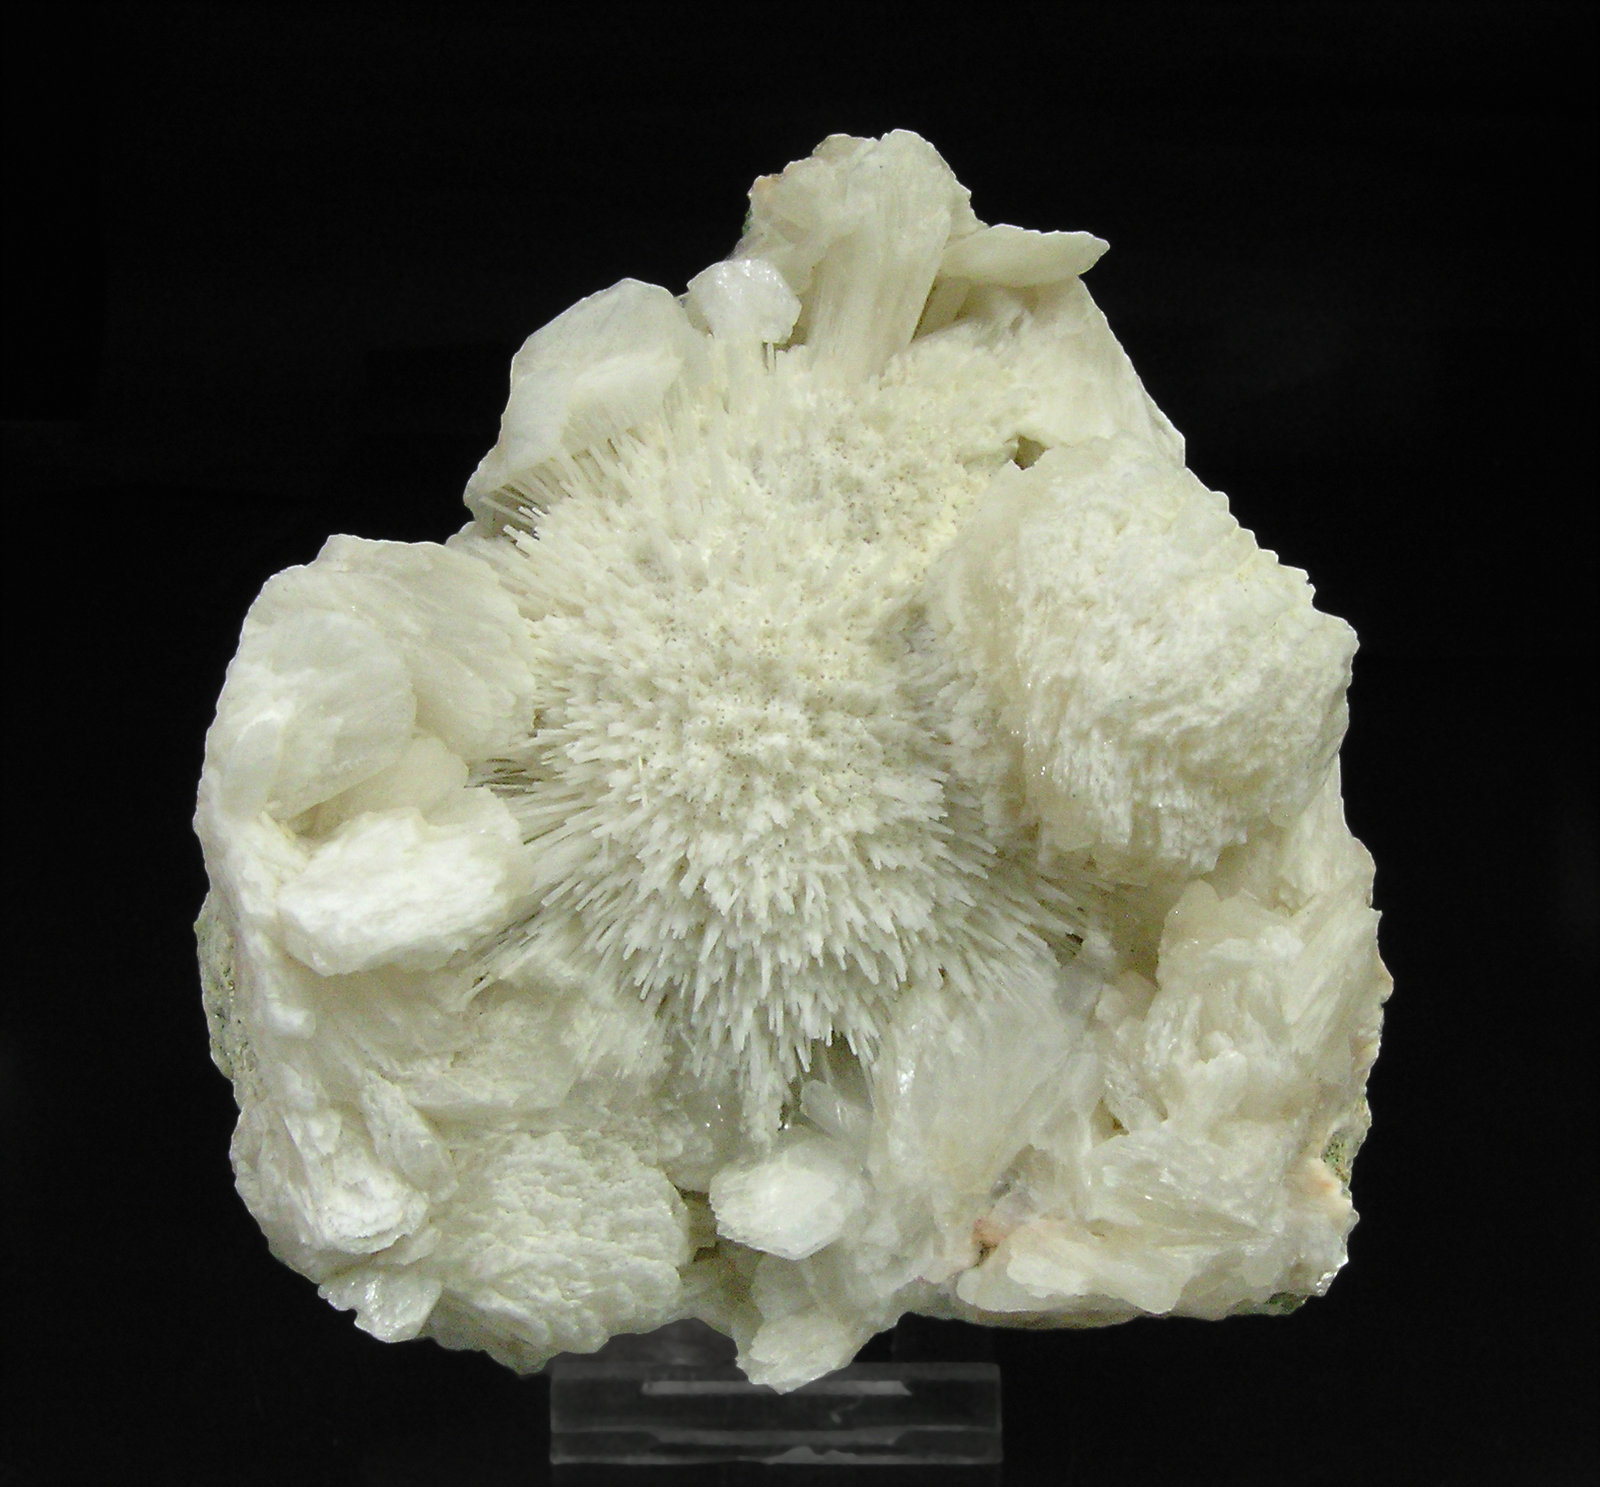 specimens/s_imagesP4/Mesolite-EB26P4f.jpg